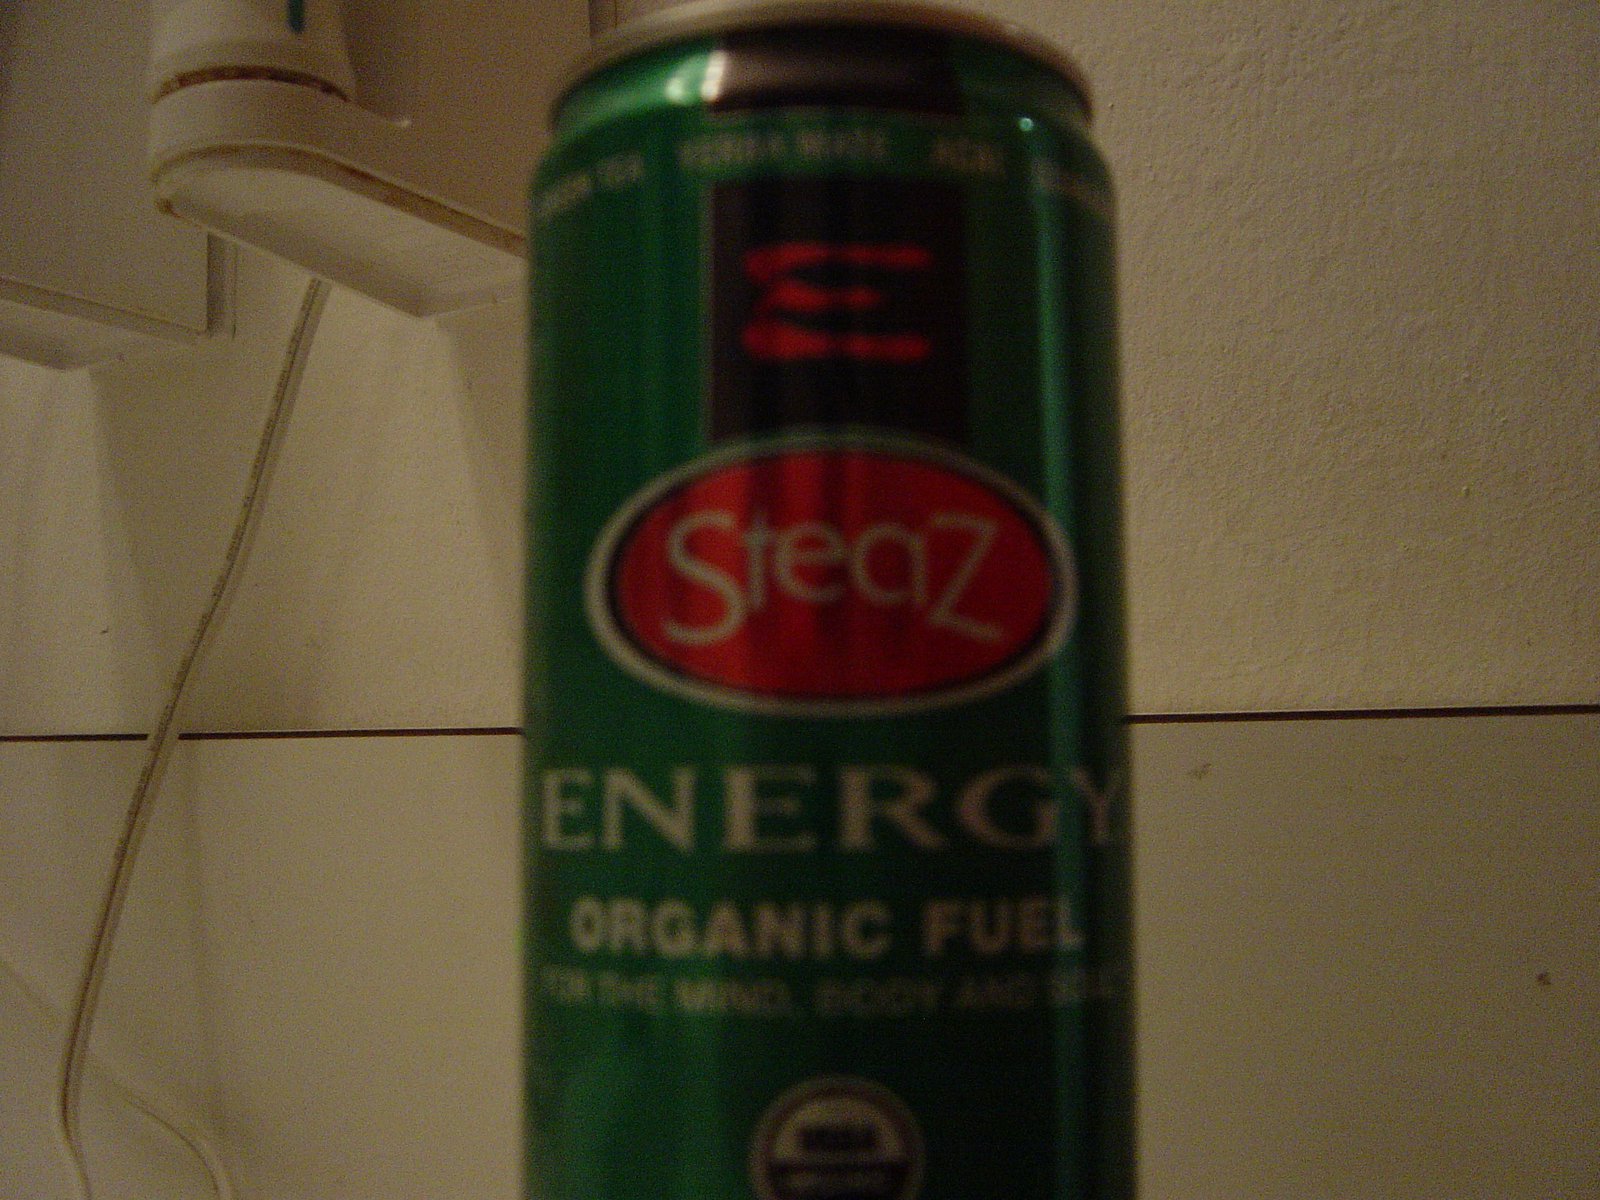 SteaZ energy drinks